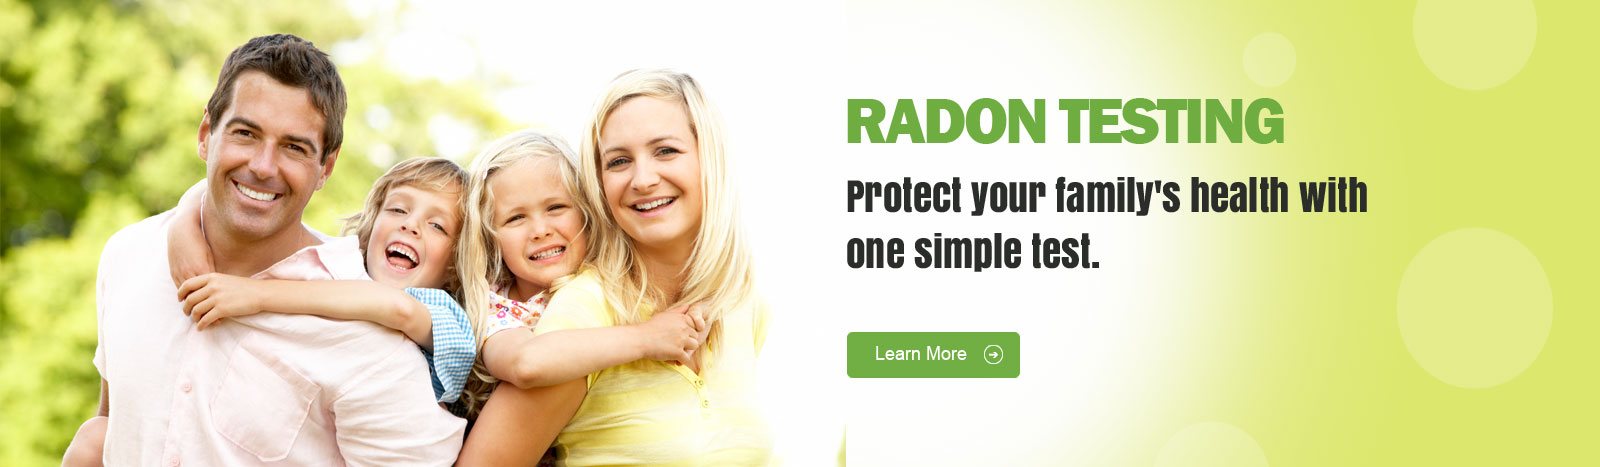 Radon Testing in Ohio